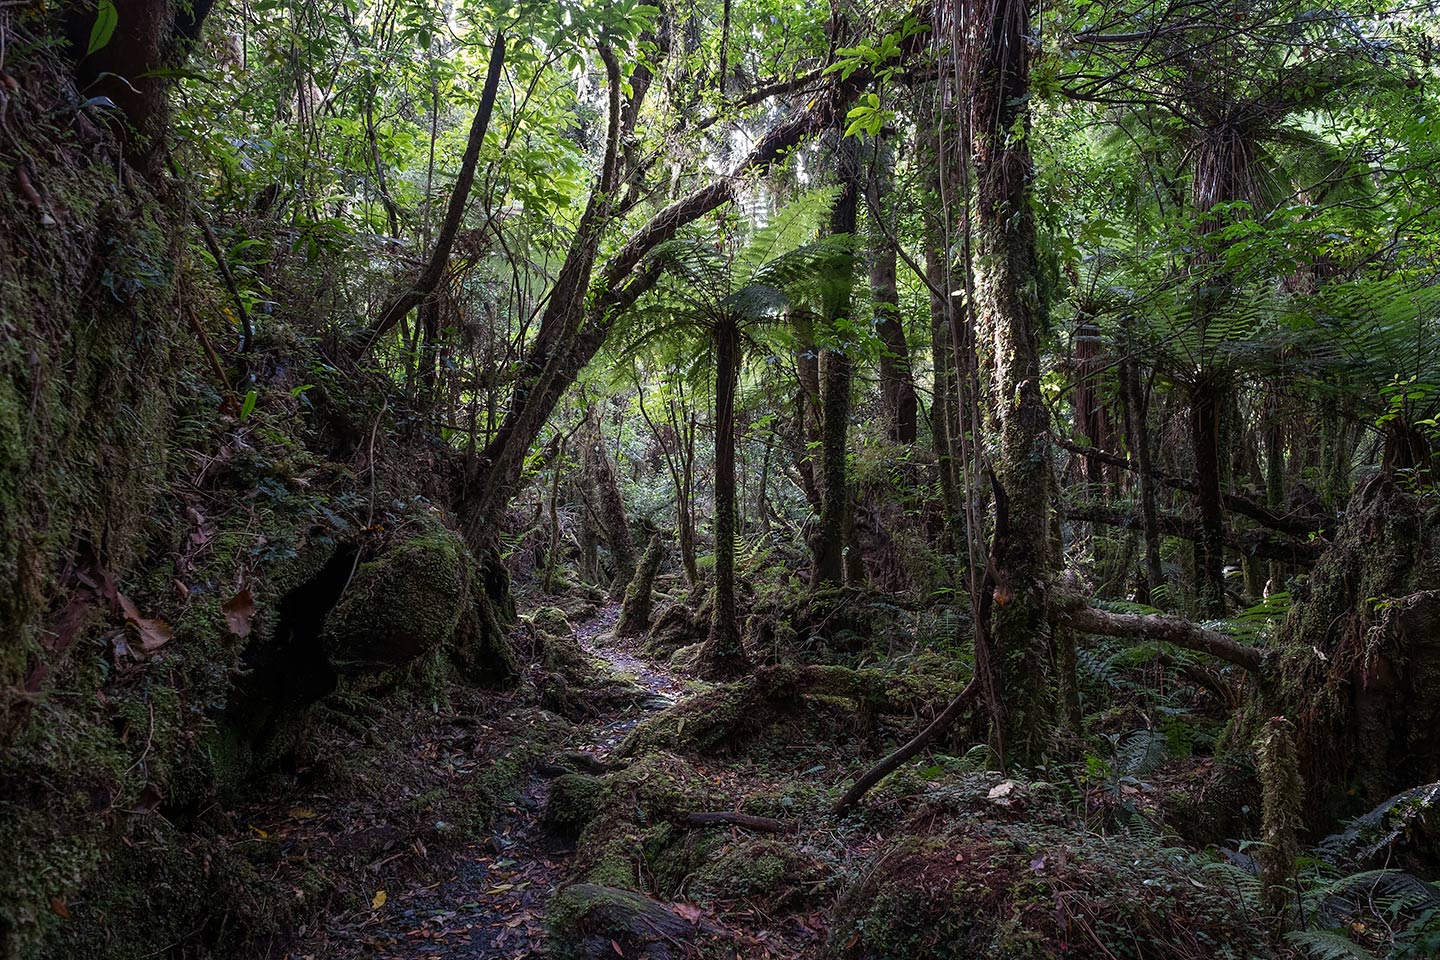 Moraine Walk, Westland Tai Poutini National Park, New Zealand